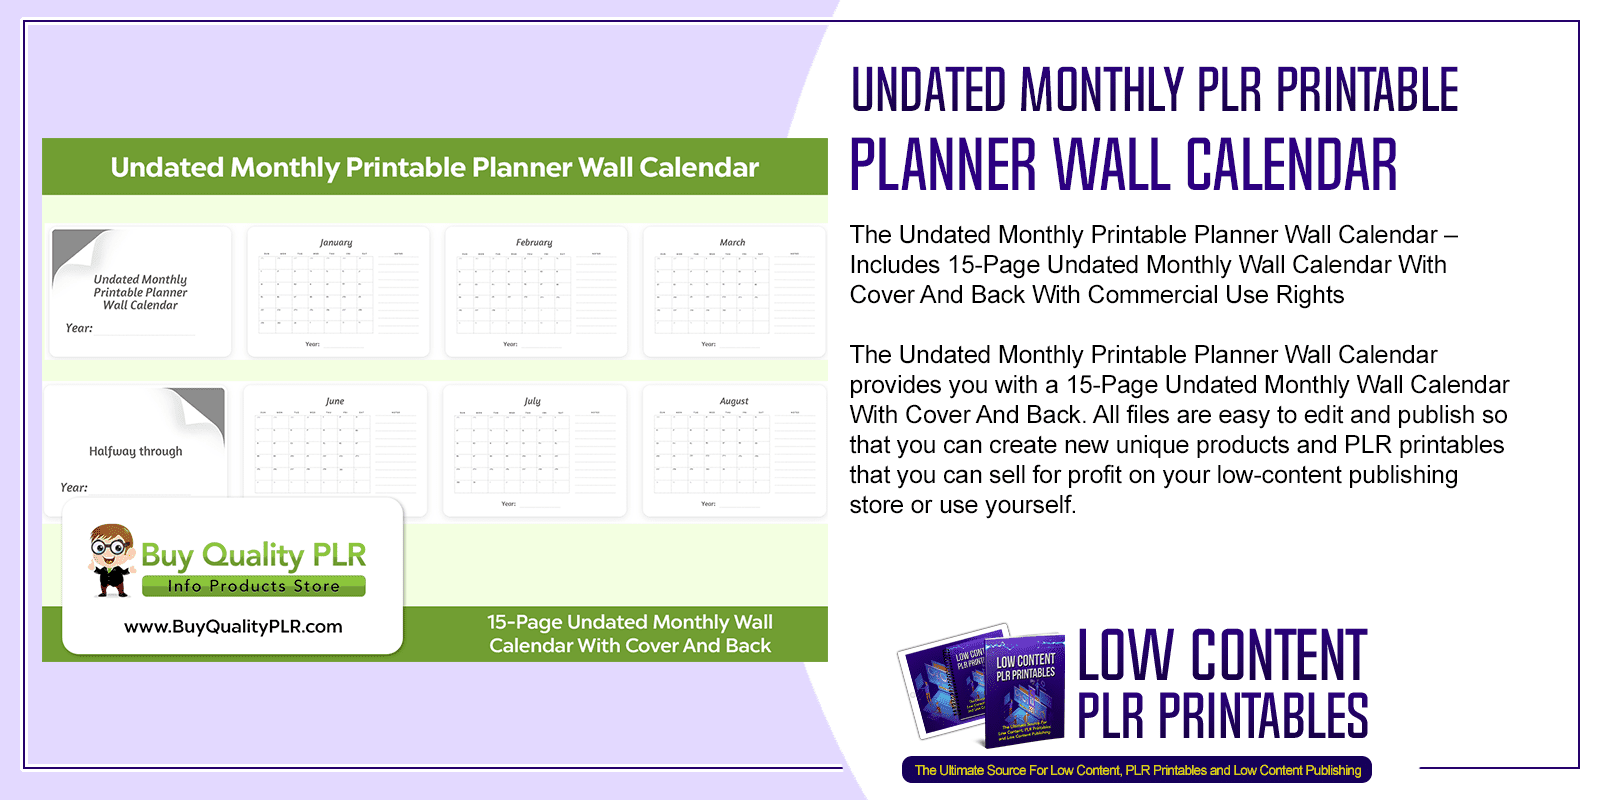 Undated Monthly PLR Printable Planner Wall Calendar